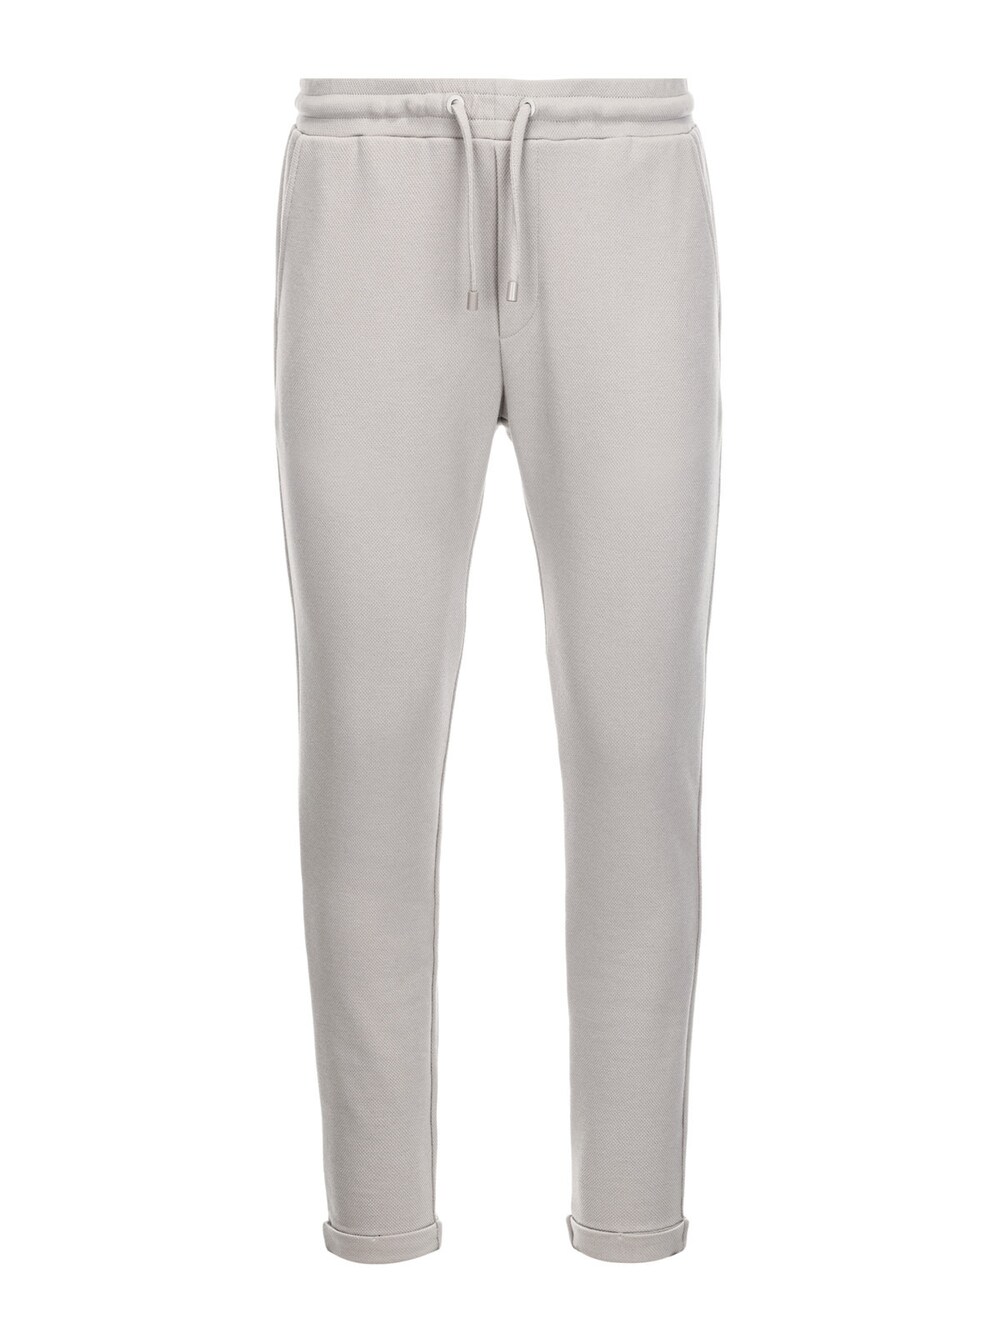 Зауженные брюки Ombre PACP-0121, светло-серый зауженные спортивные брюки 2 пары ombre серый